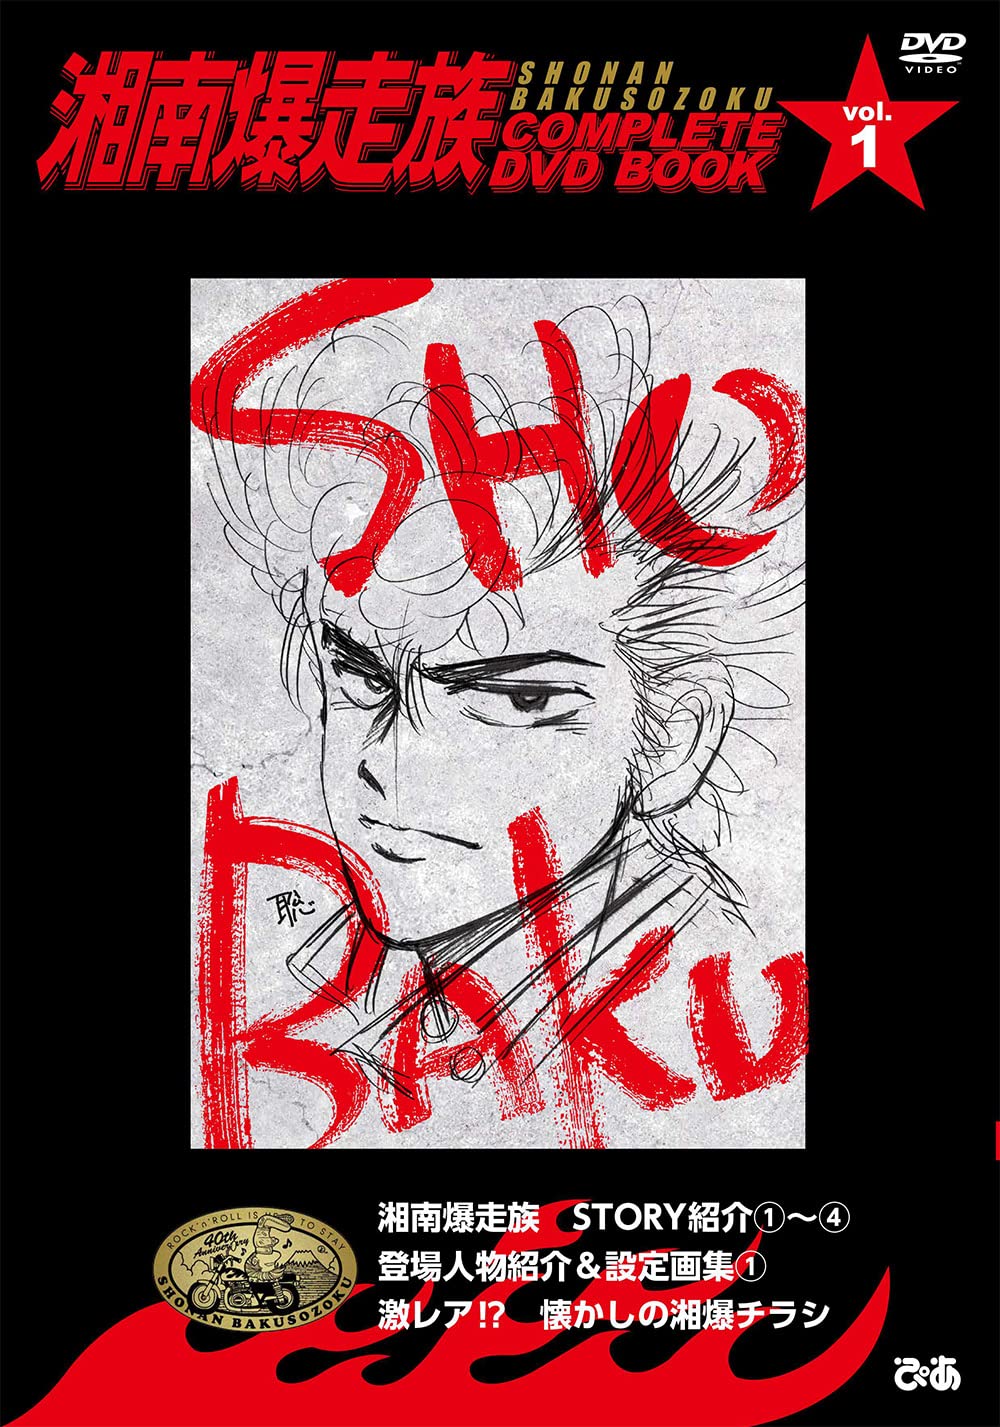 –　Shounan　Book　BOOK　Bakusouzoku　DVD　Japanese　COMPLETE　vol.1　Store